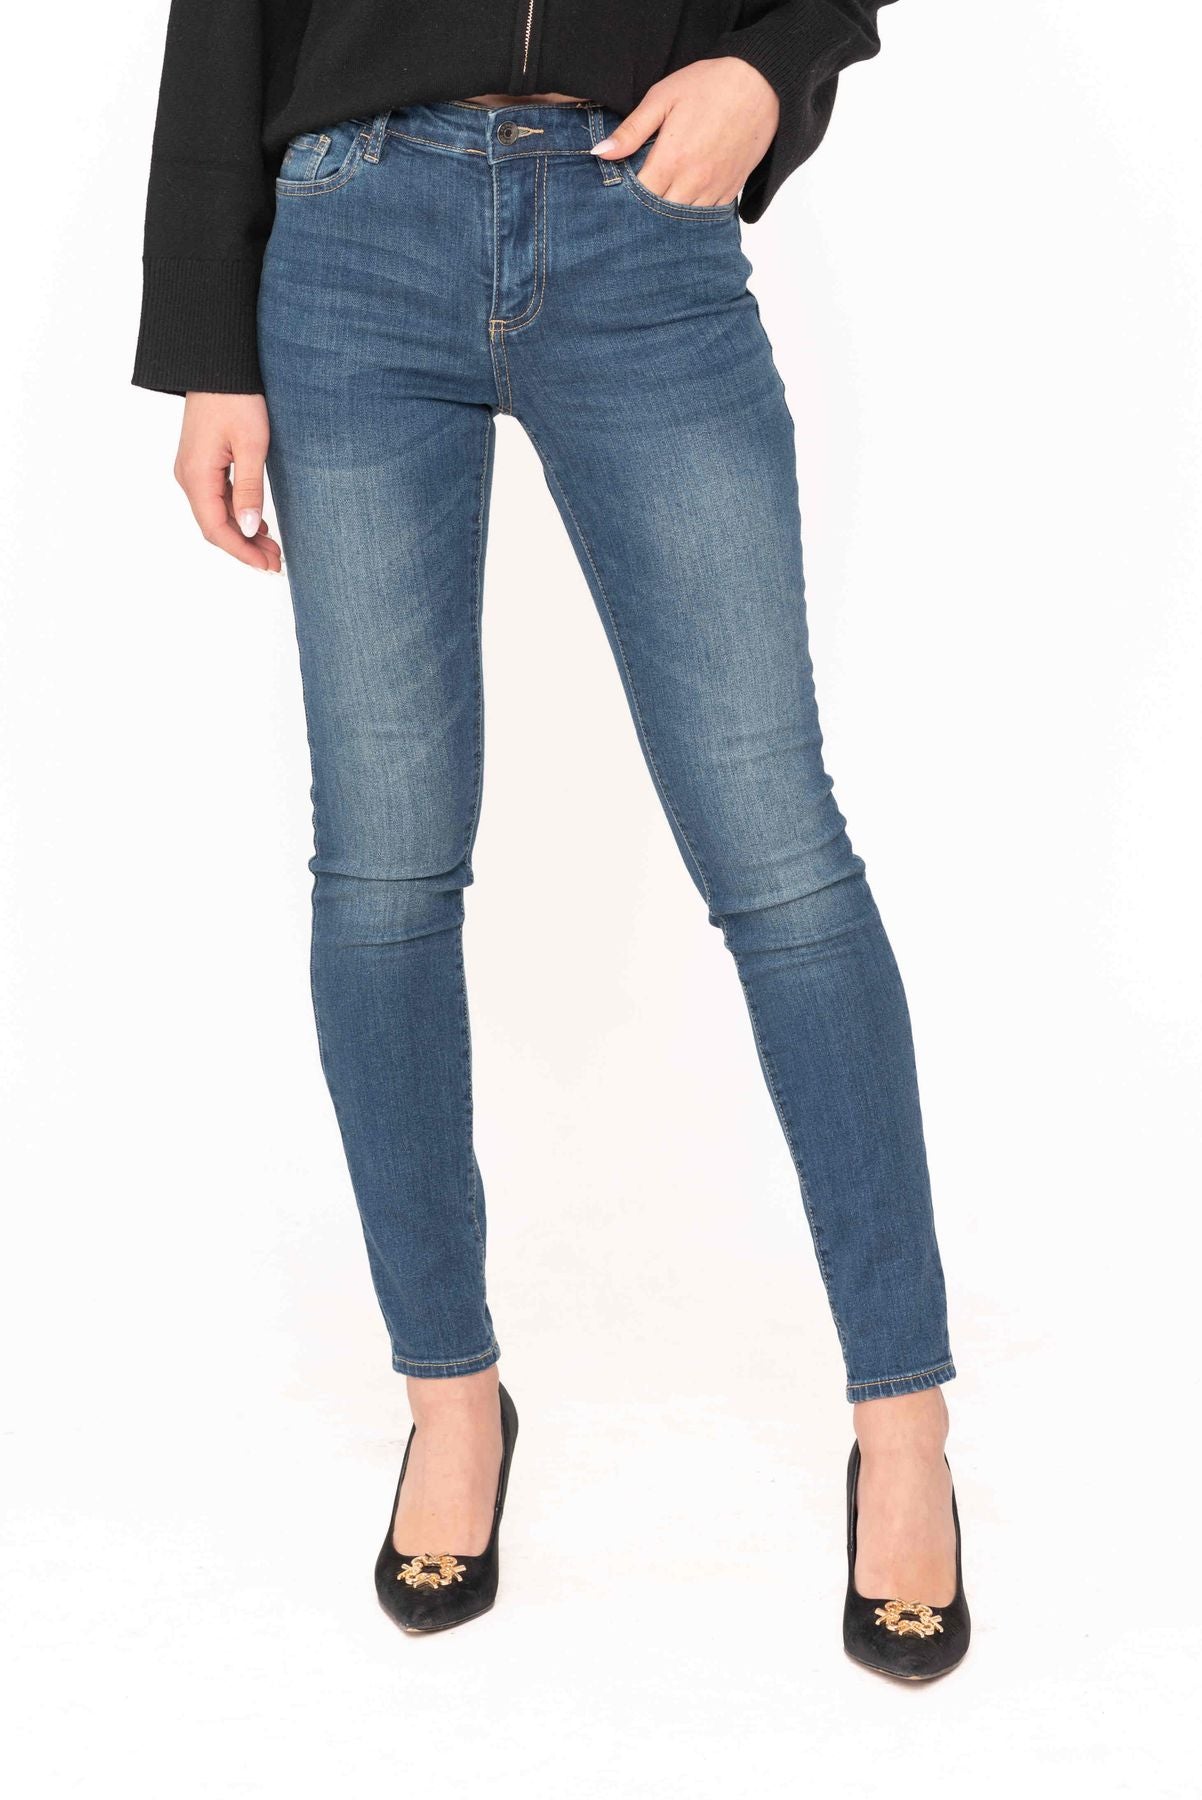 Jeans super skinny - Taxi Bleu Moda Donna - 2000000053806